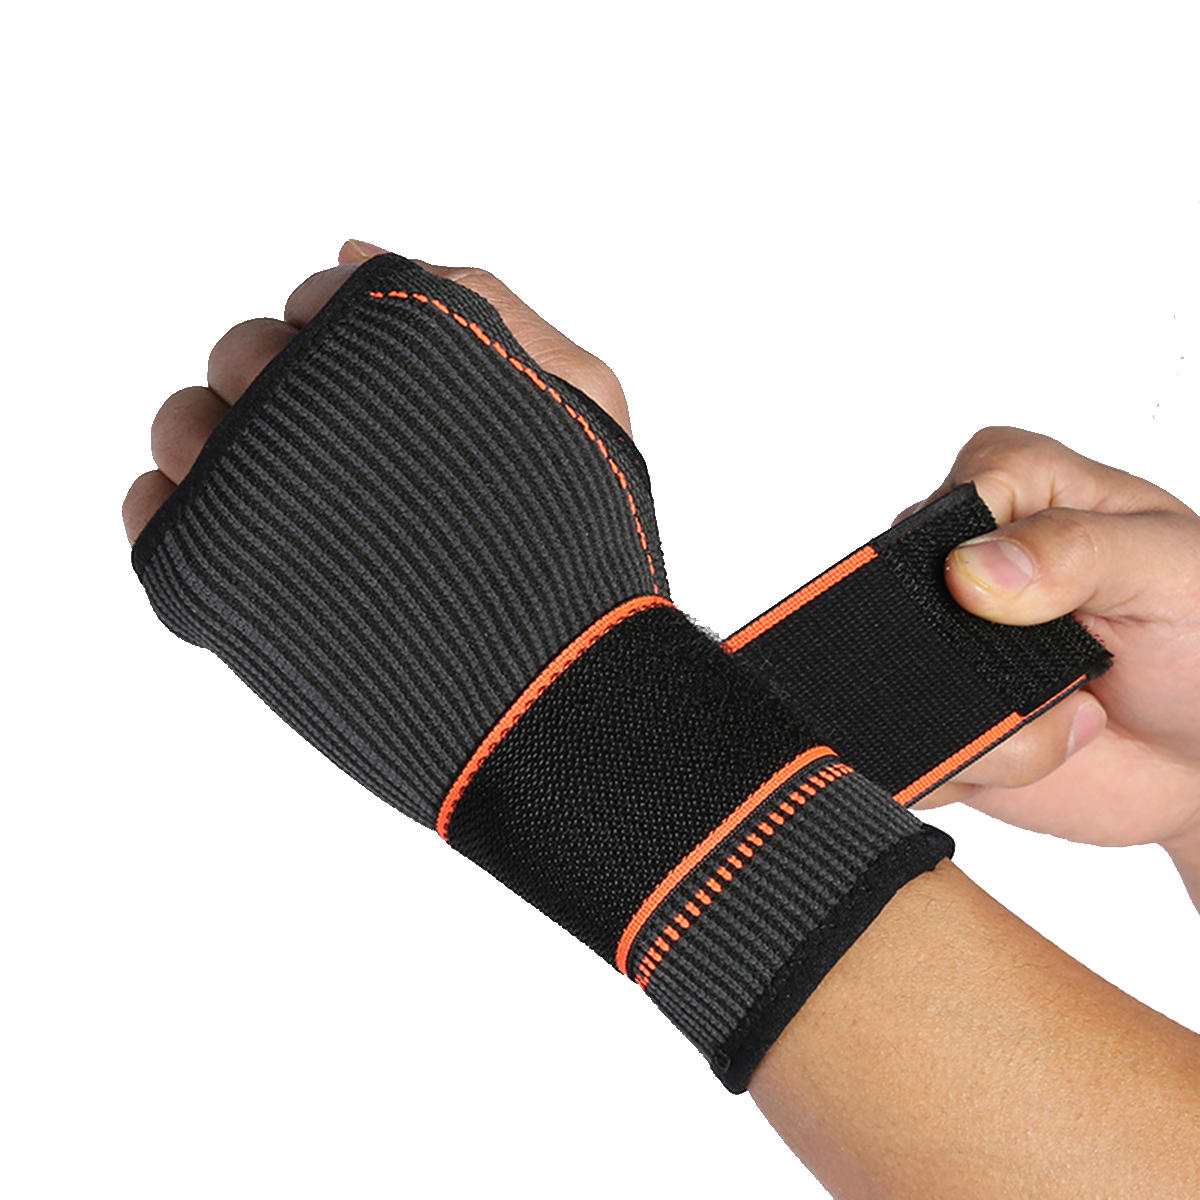 Regulowany podpórka nadgarstka na kemping i sport, opaski na dłonie zapobiegające skręceniom